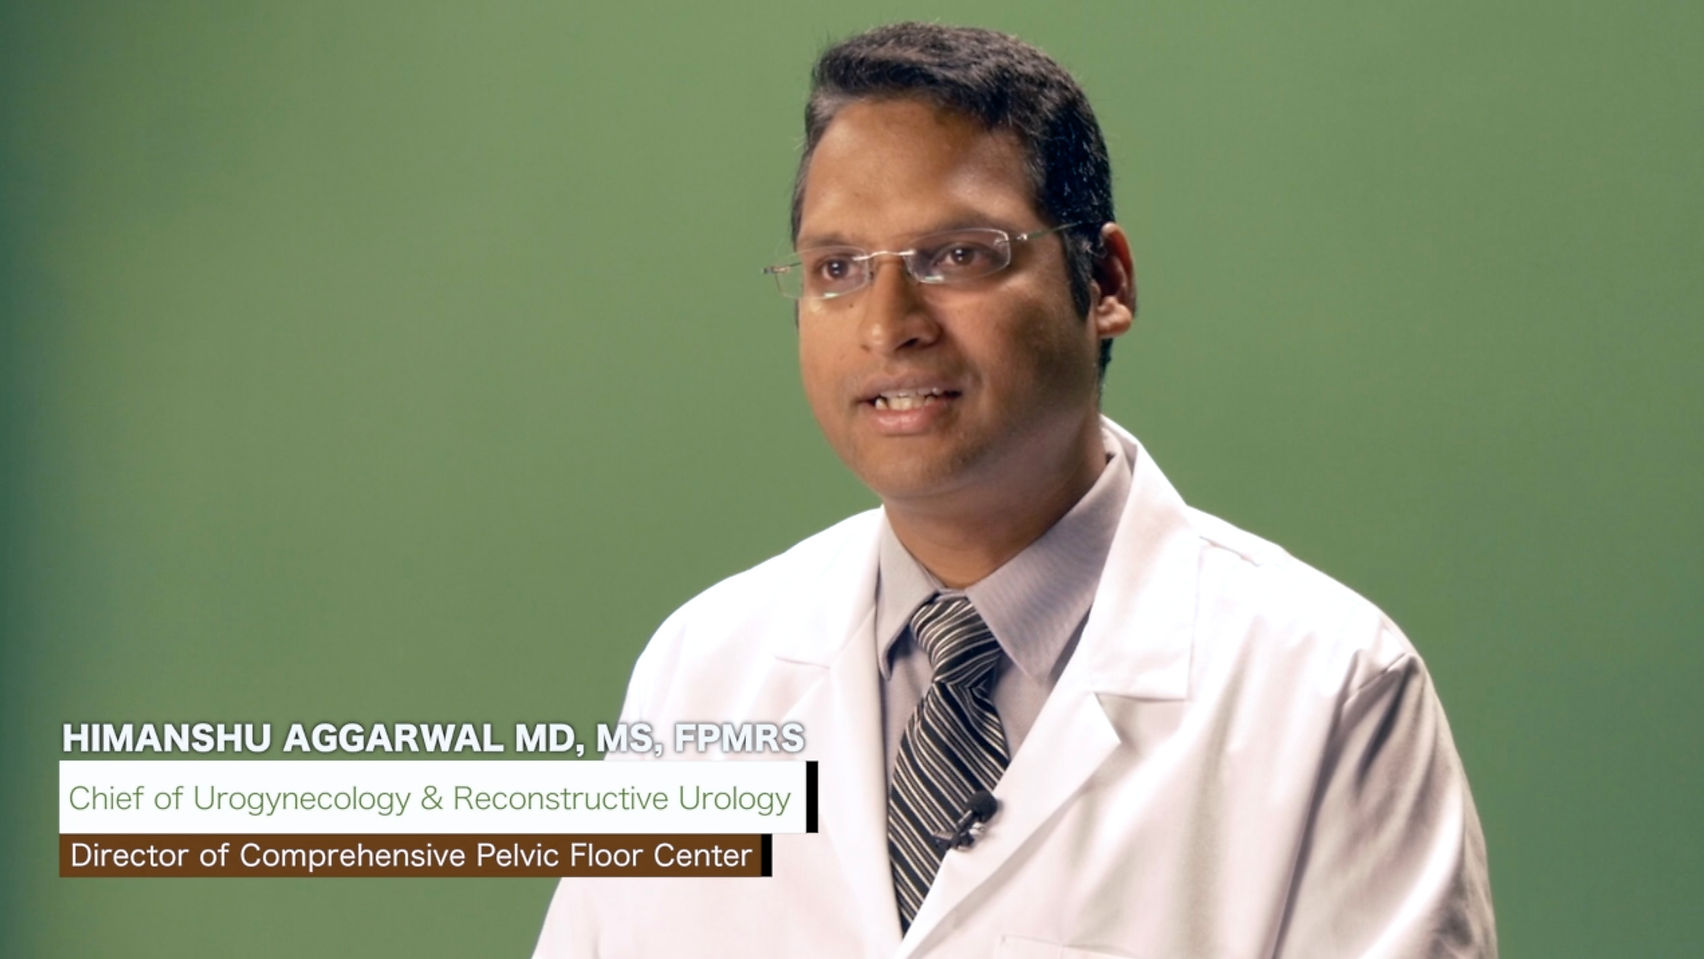 Meet Dr. Himanshu Aggarwal